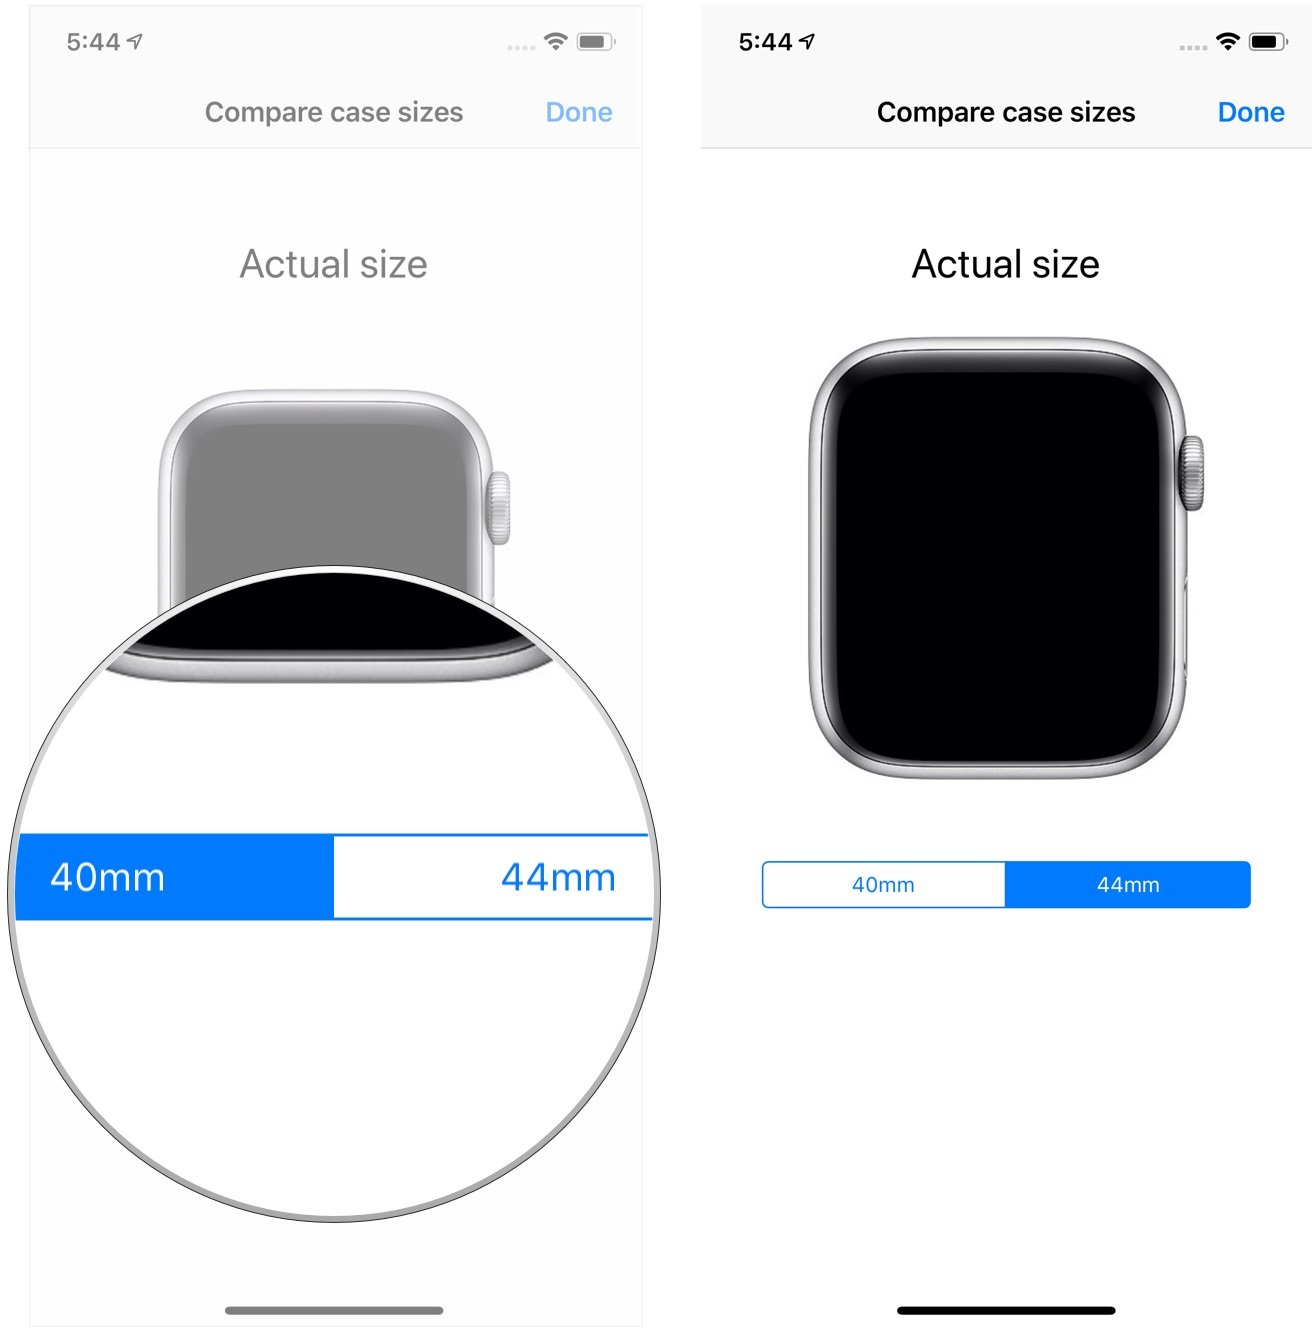 Apple Watch Size Chart